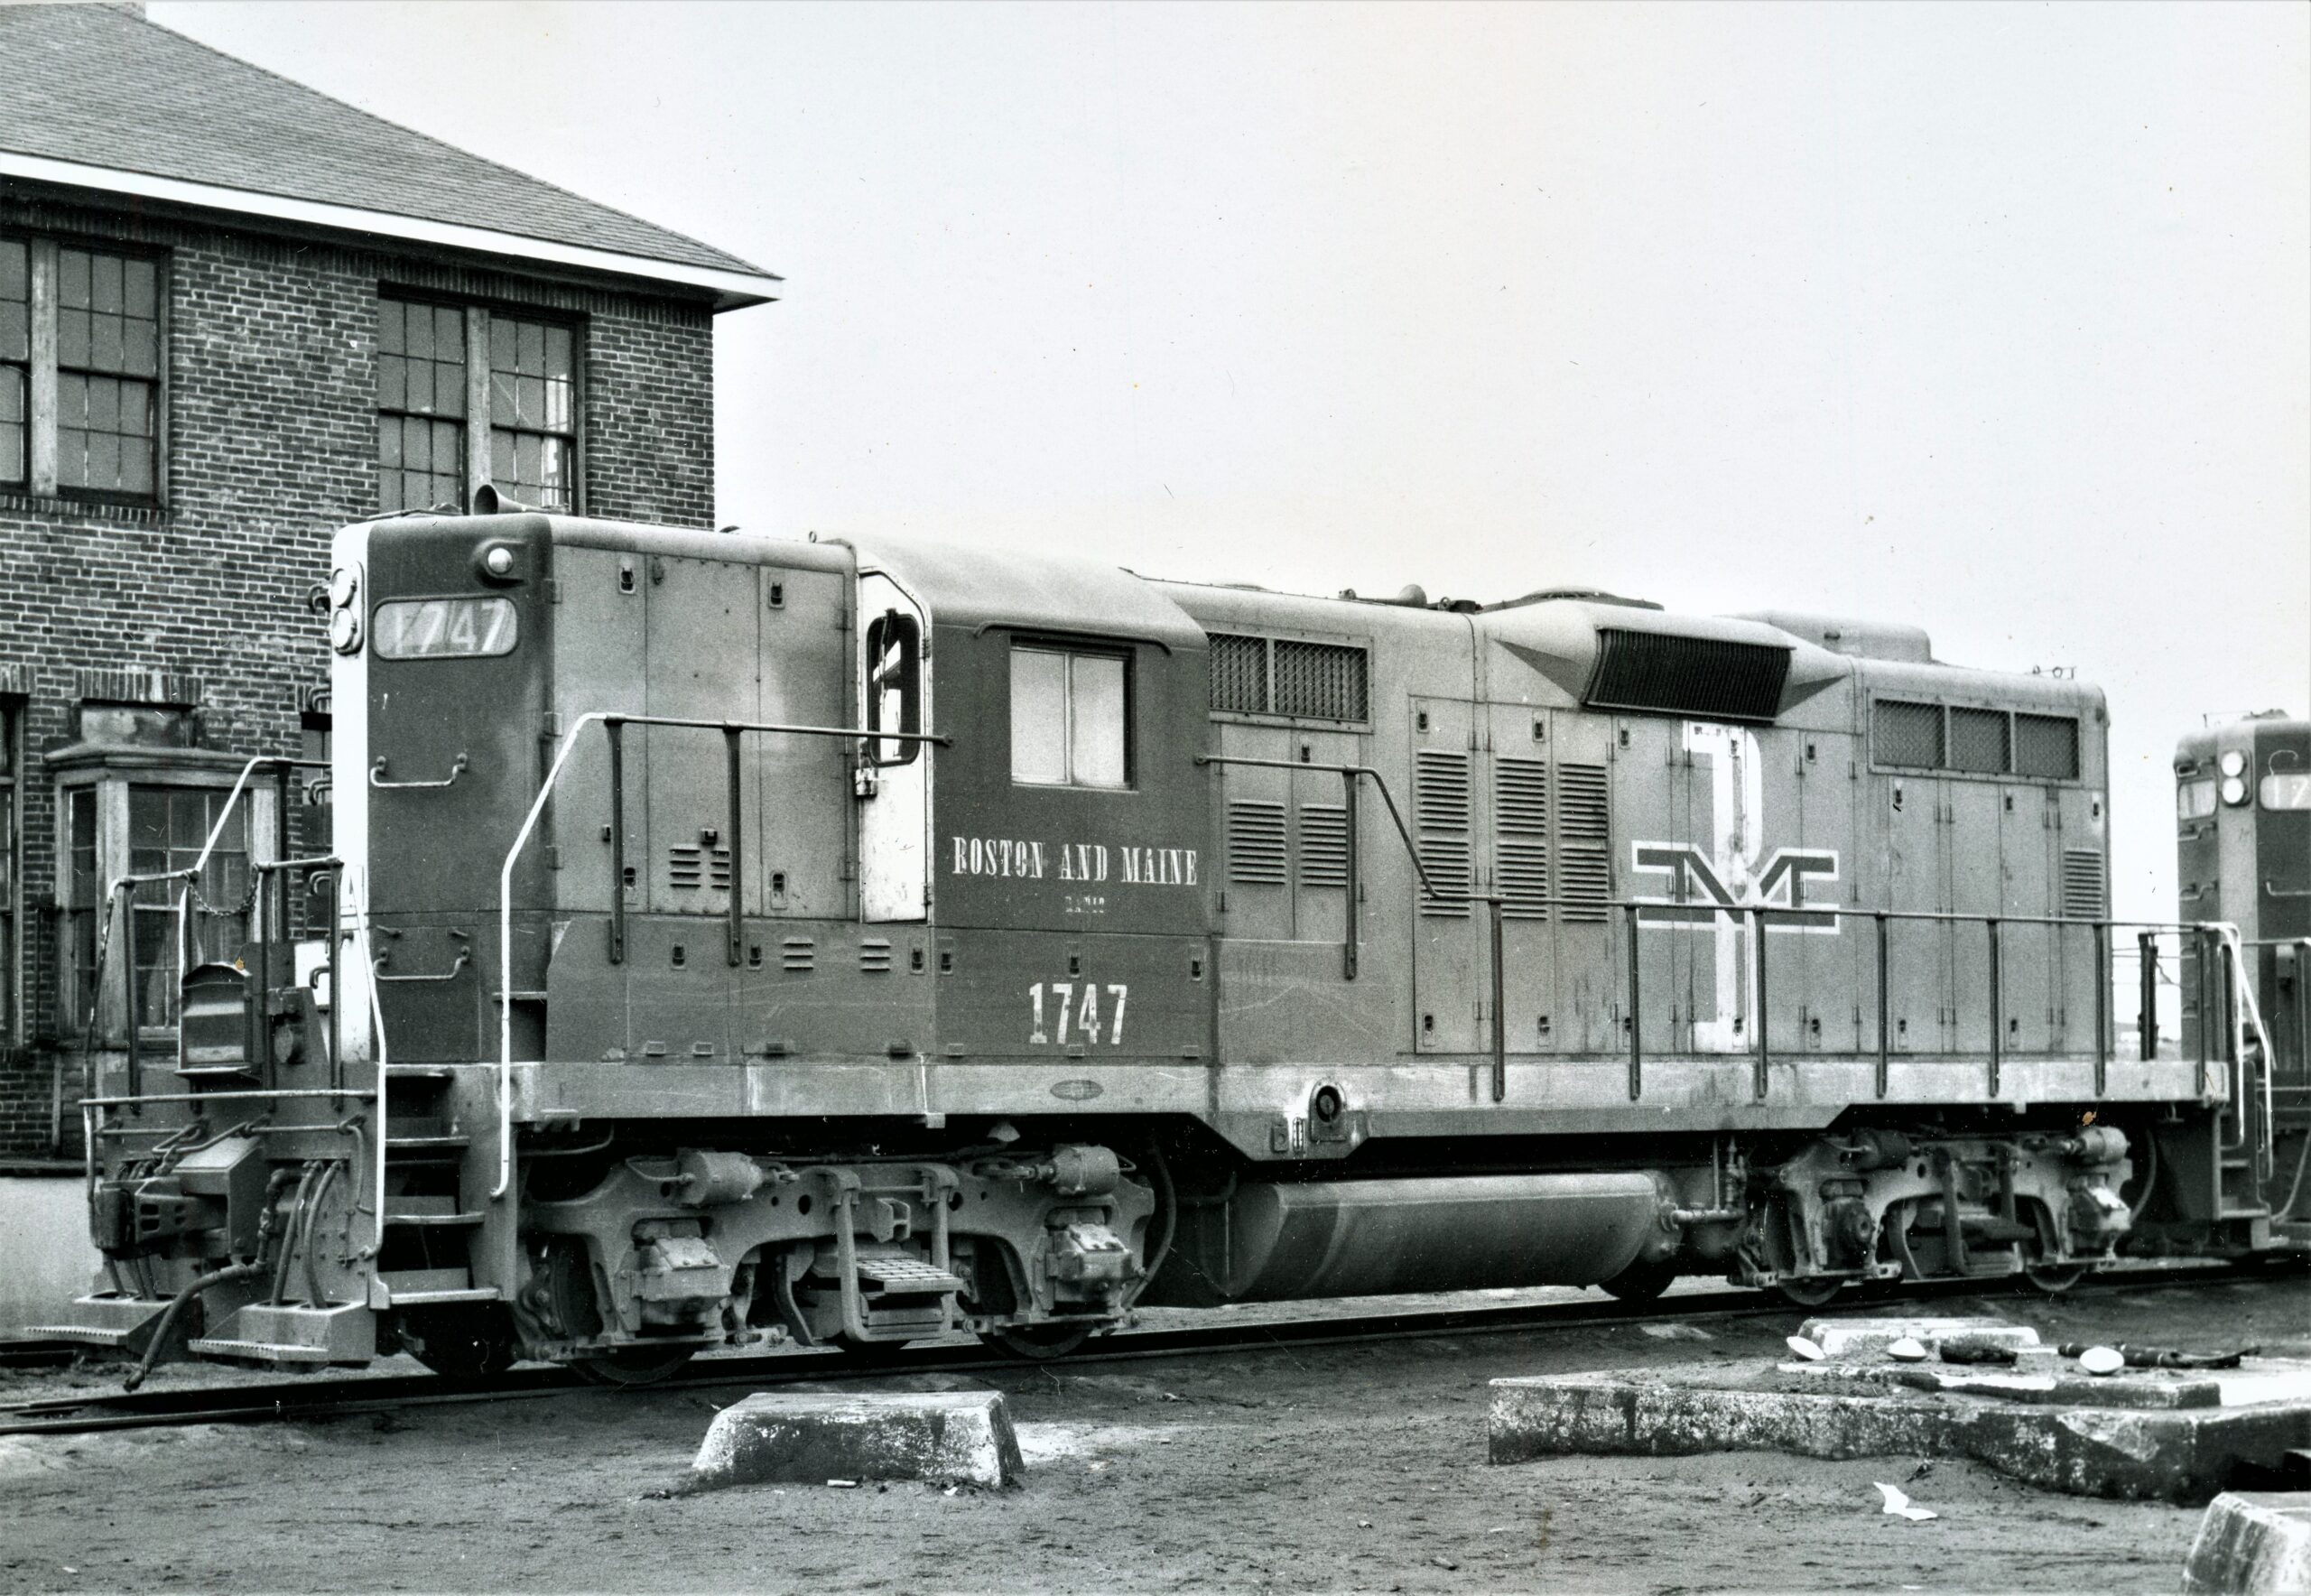 Boston and Maine | South Portland, Maine | EMD Class GP9 #1747 diesel-electric locomotive | April 1970 | George Melvin photograph | Elmer Kremkow collection